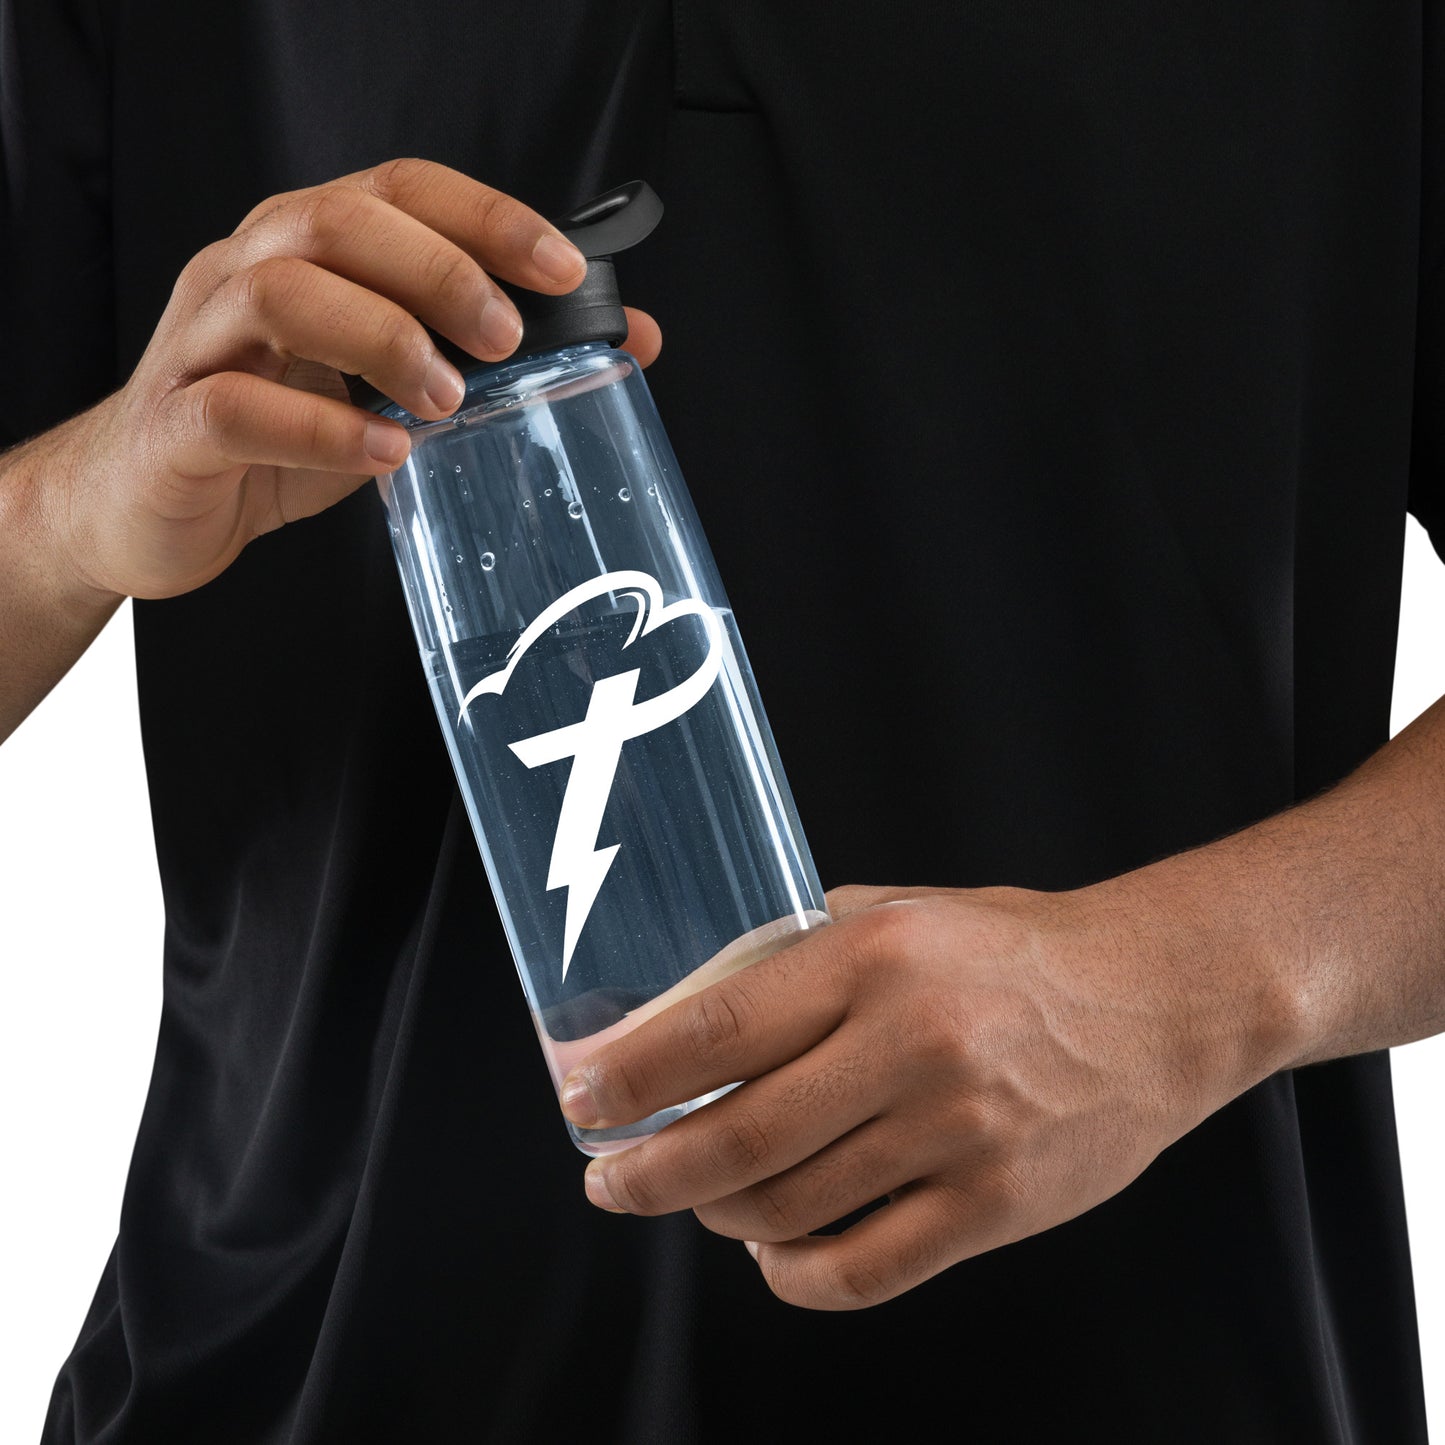 Thunder T - Sports water bottle